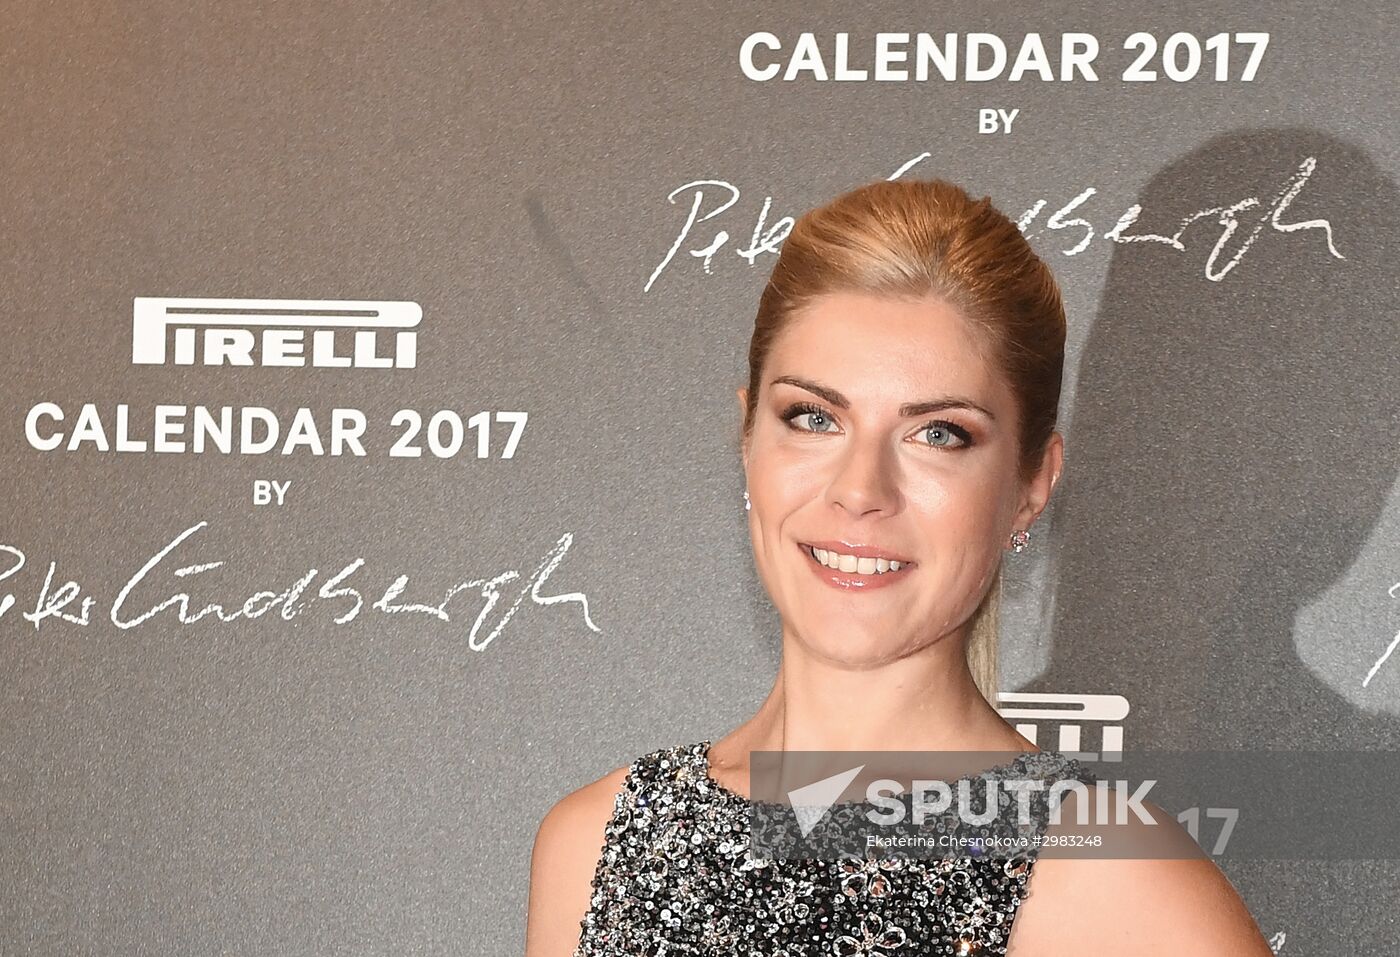 2017 Pirelli Calendar presented